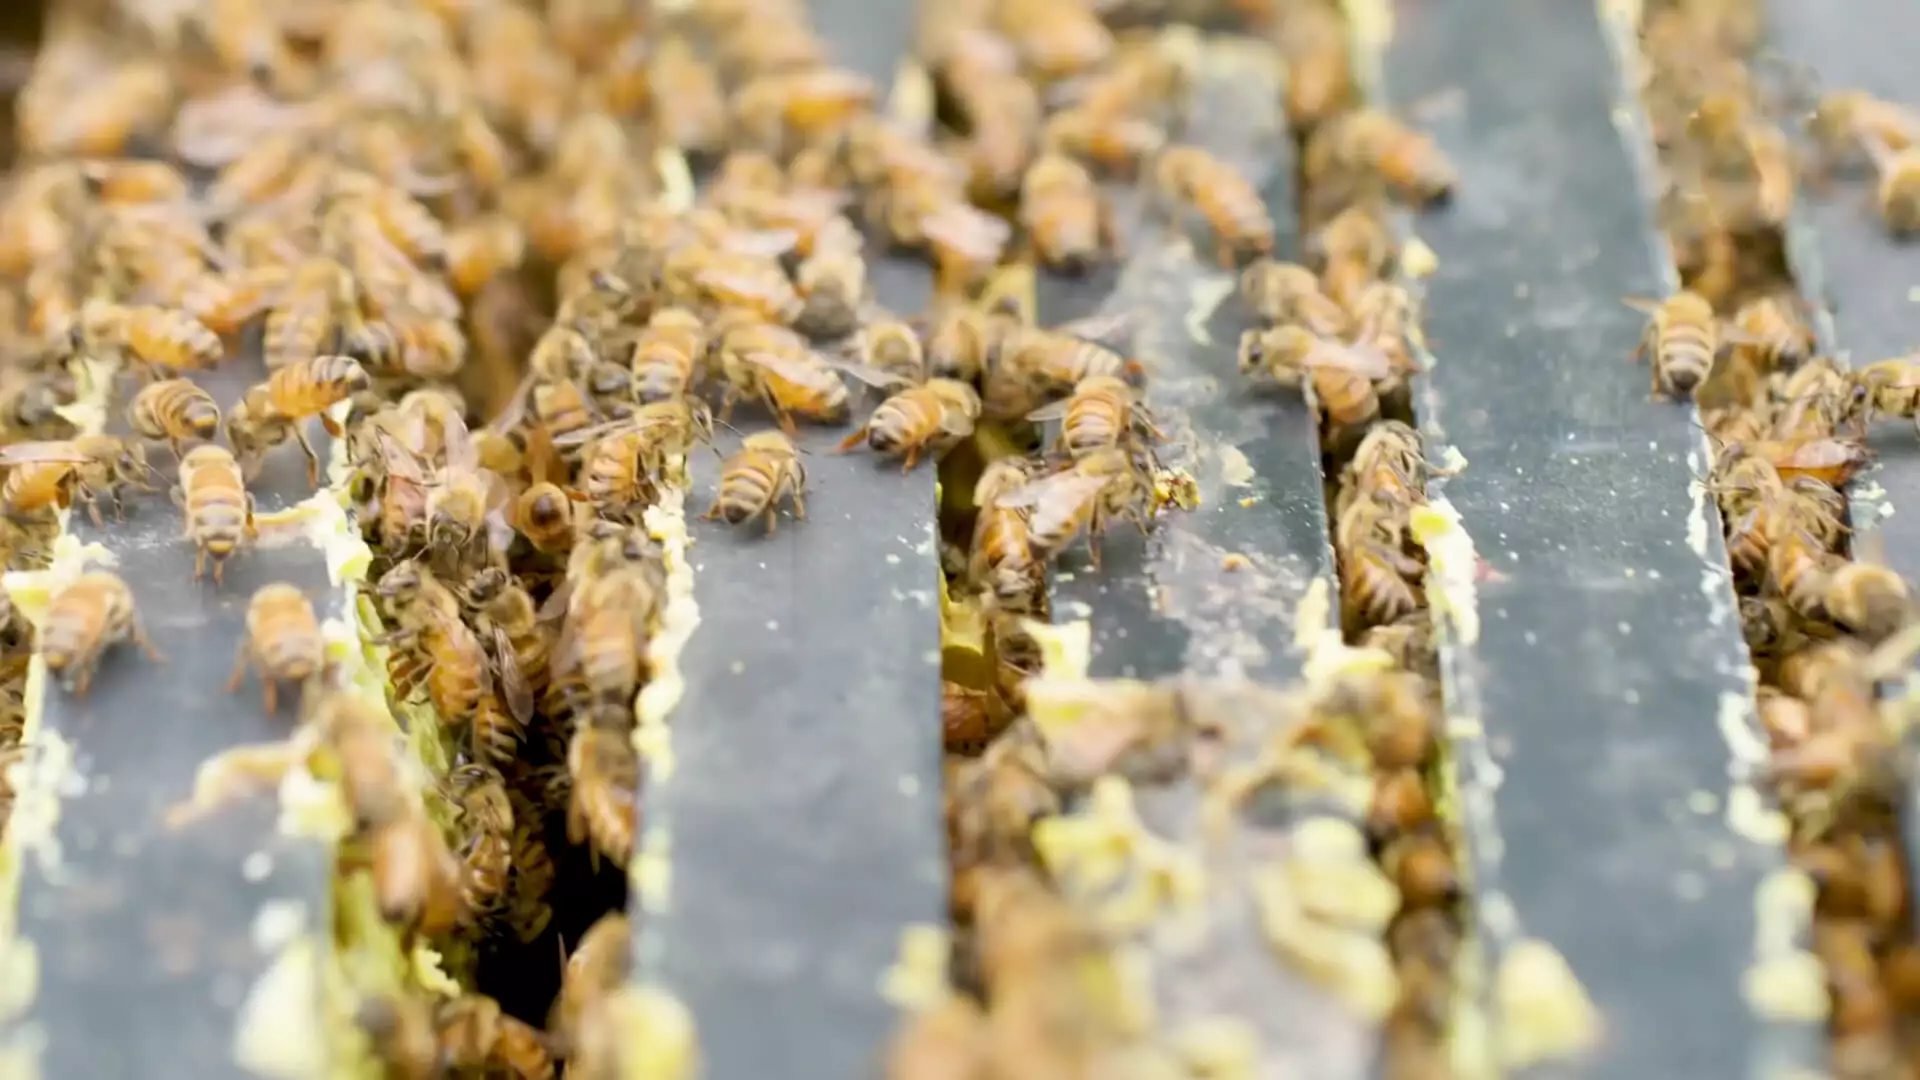 Honey bees producing honey in the hive - Properties of Eucalyptus honey - Attar Khan